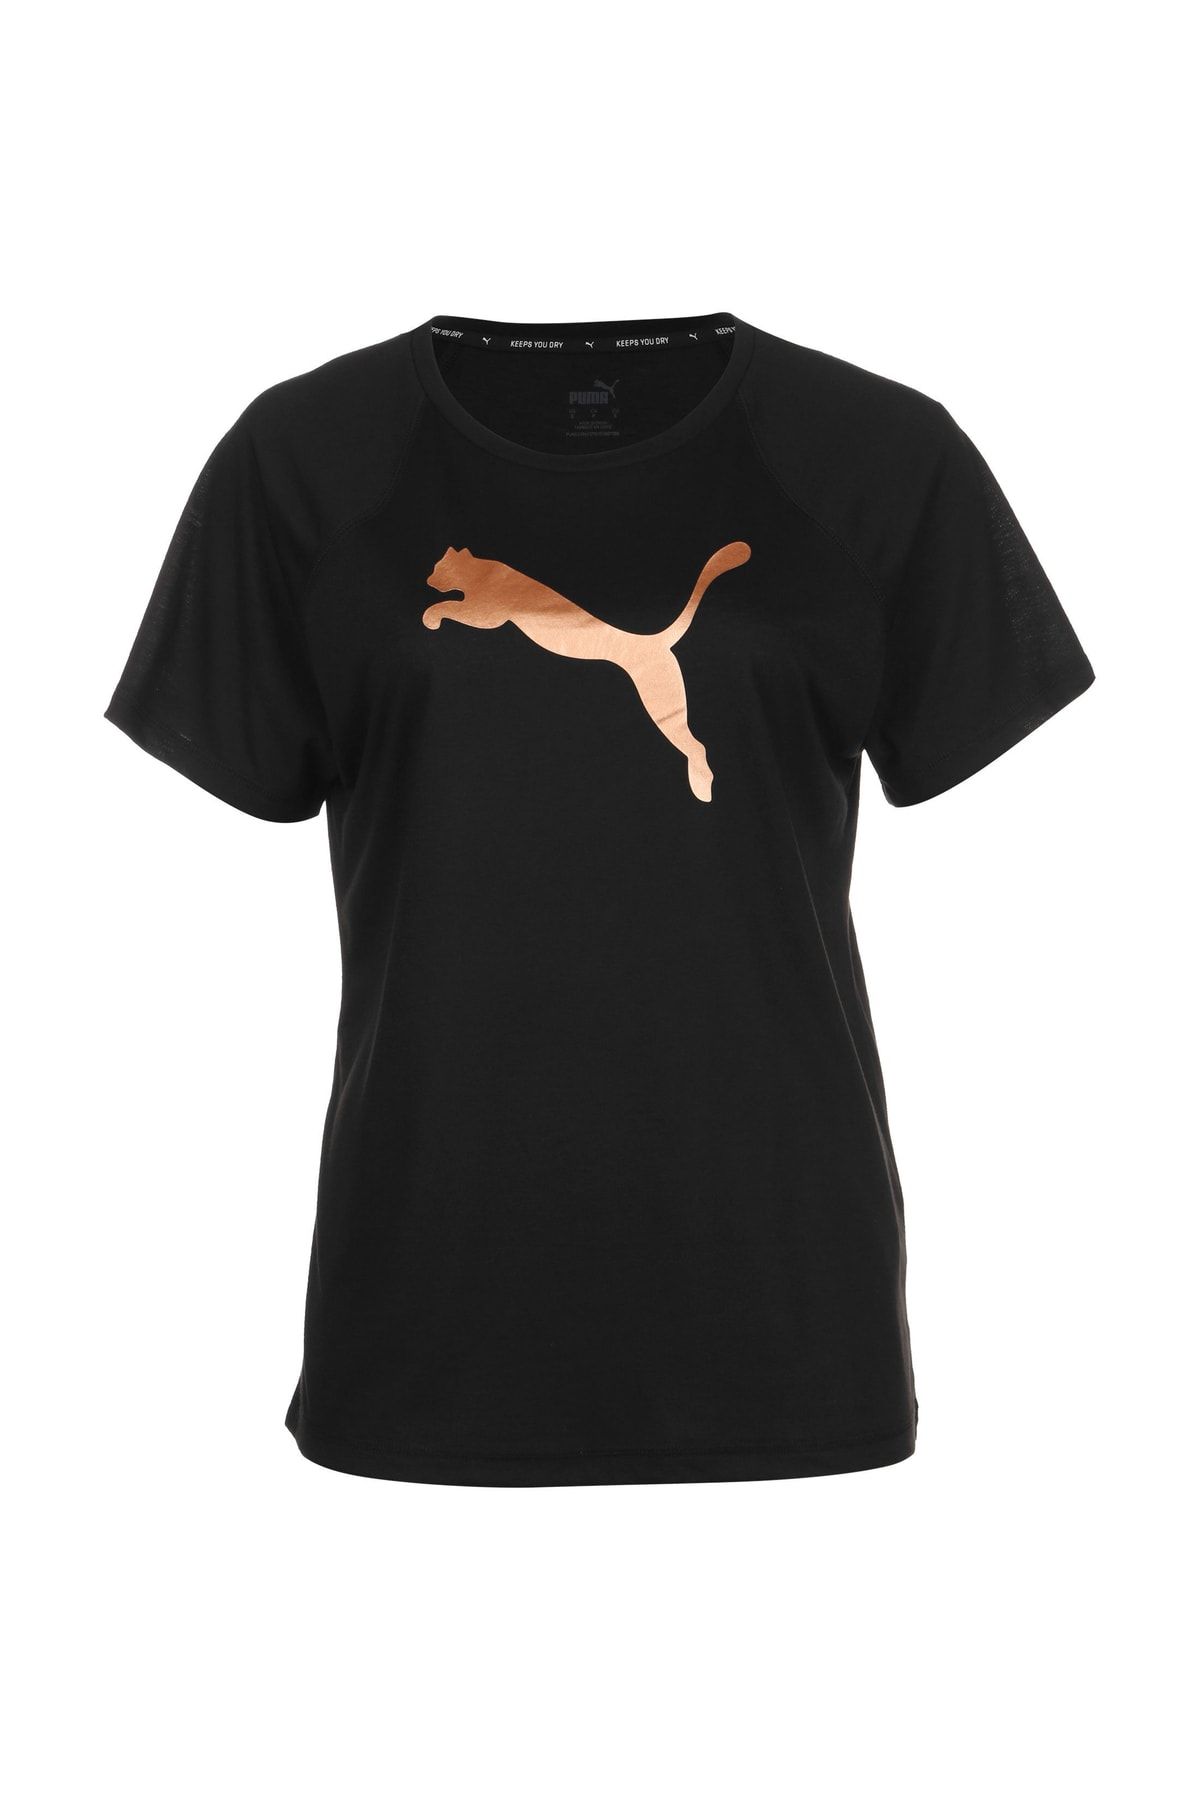 Puma T-Shirt - Black - Regular - Trendyol fit